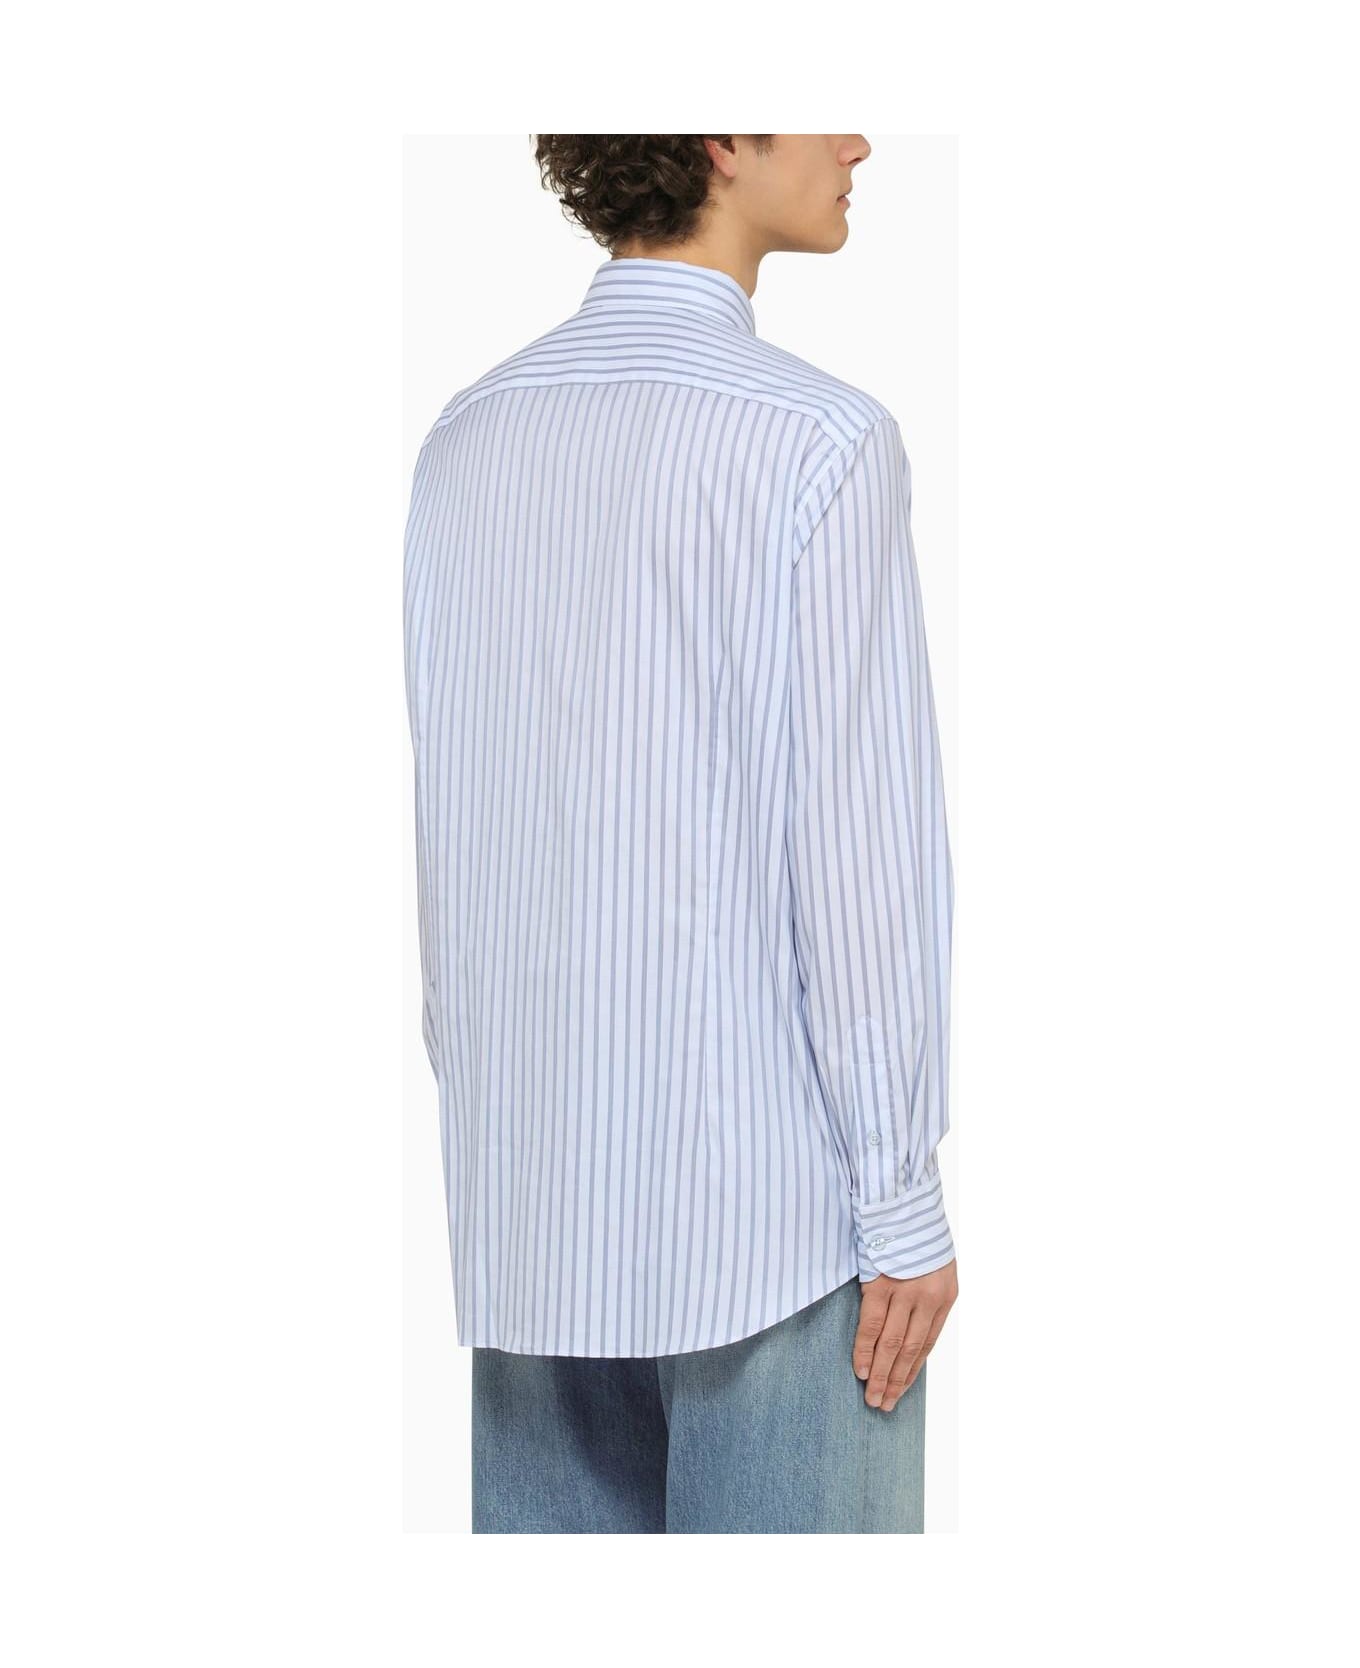 Etro White\/light Blue Striped Long Sleeved Shirt - Azzurro